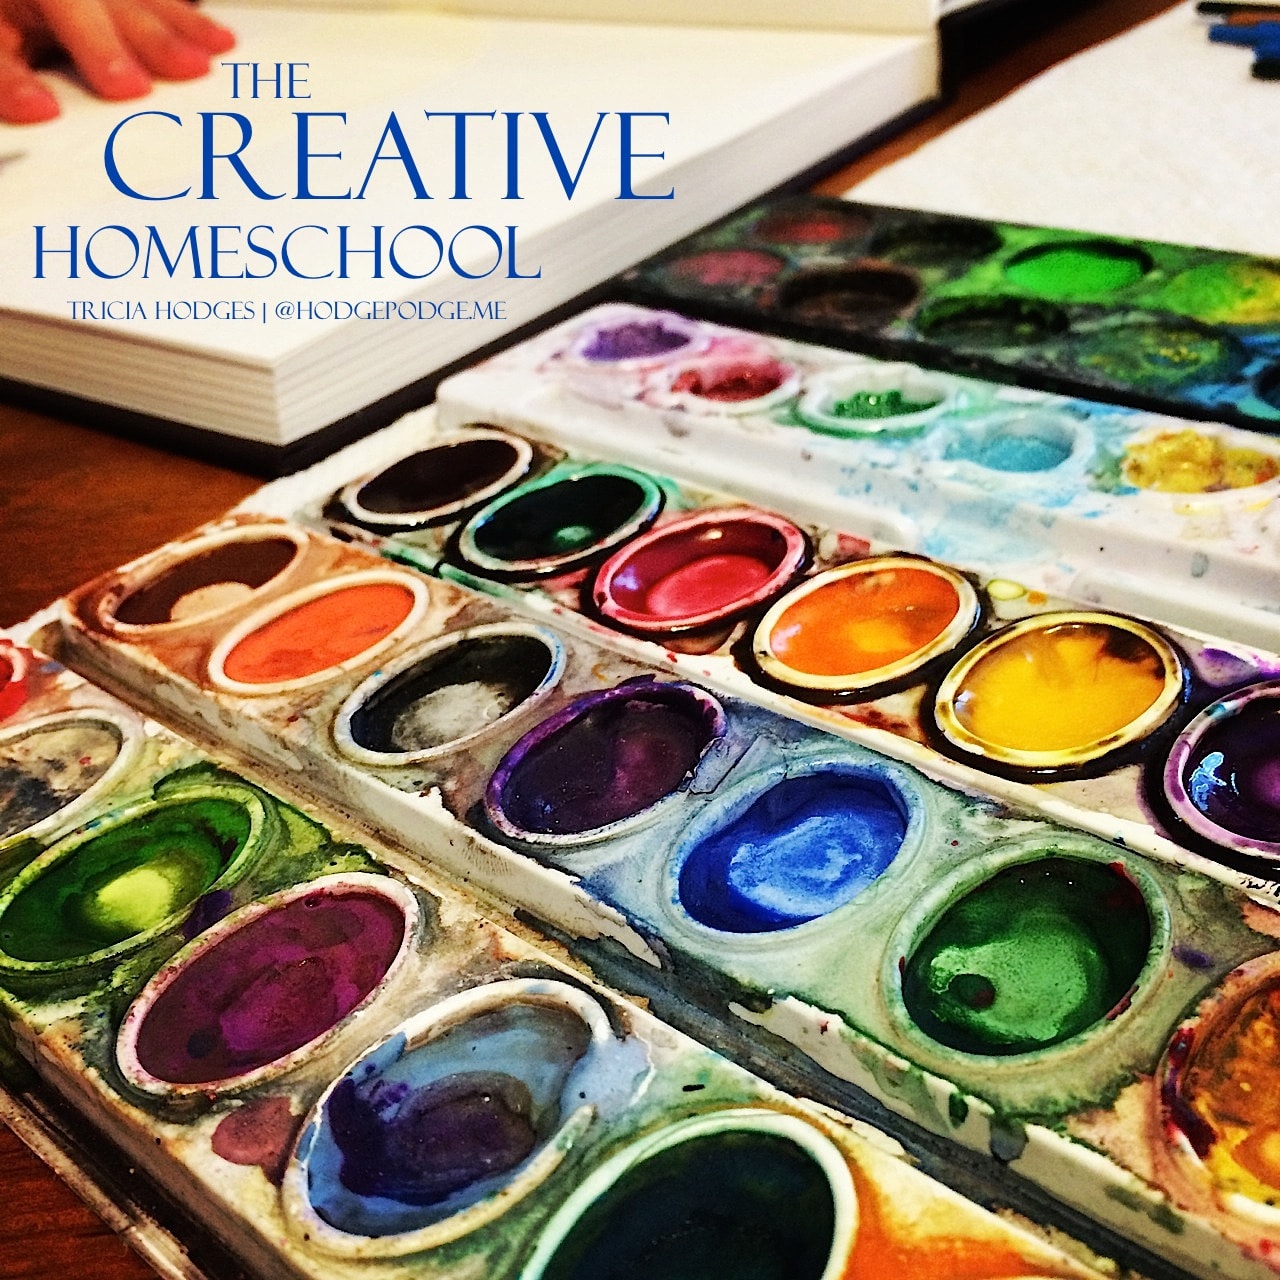 The Creative Homeschool